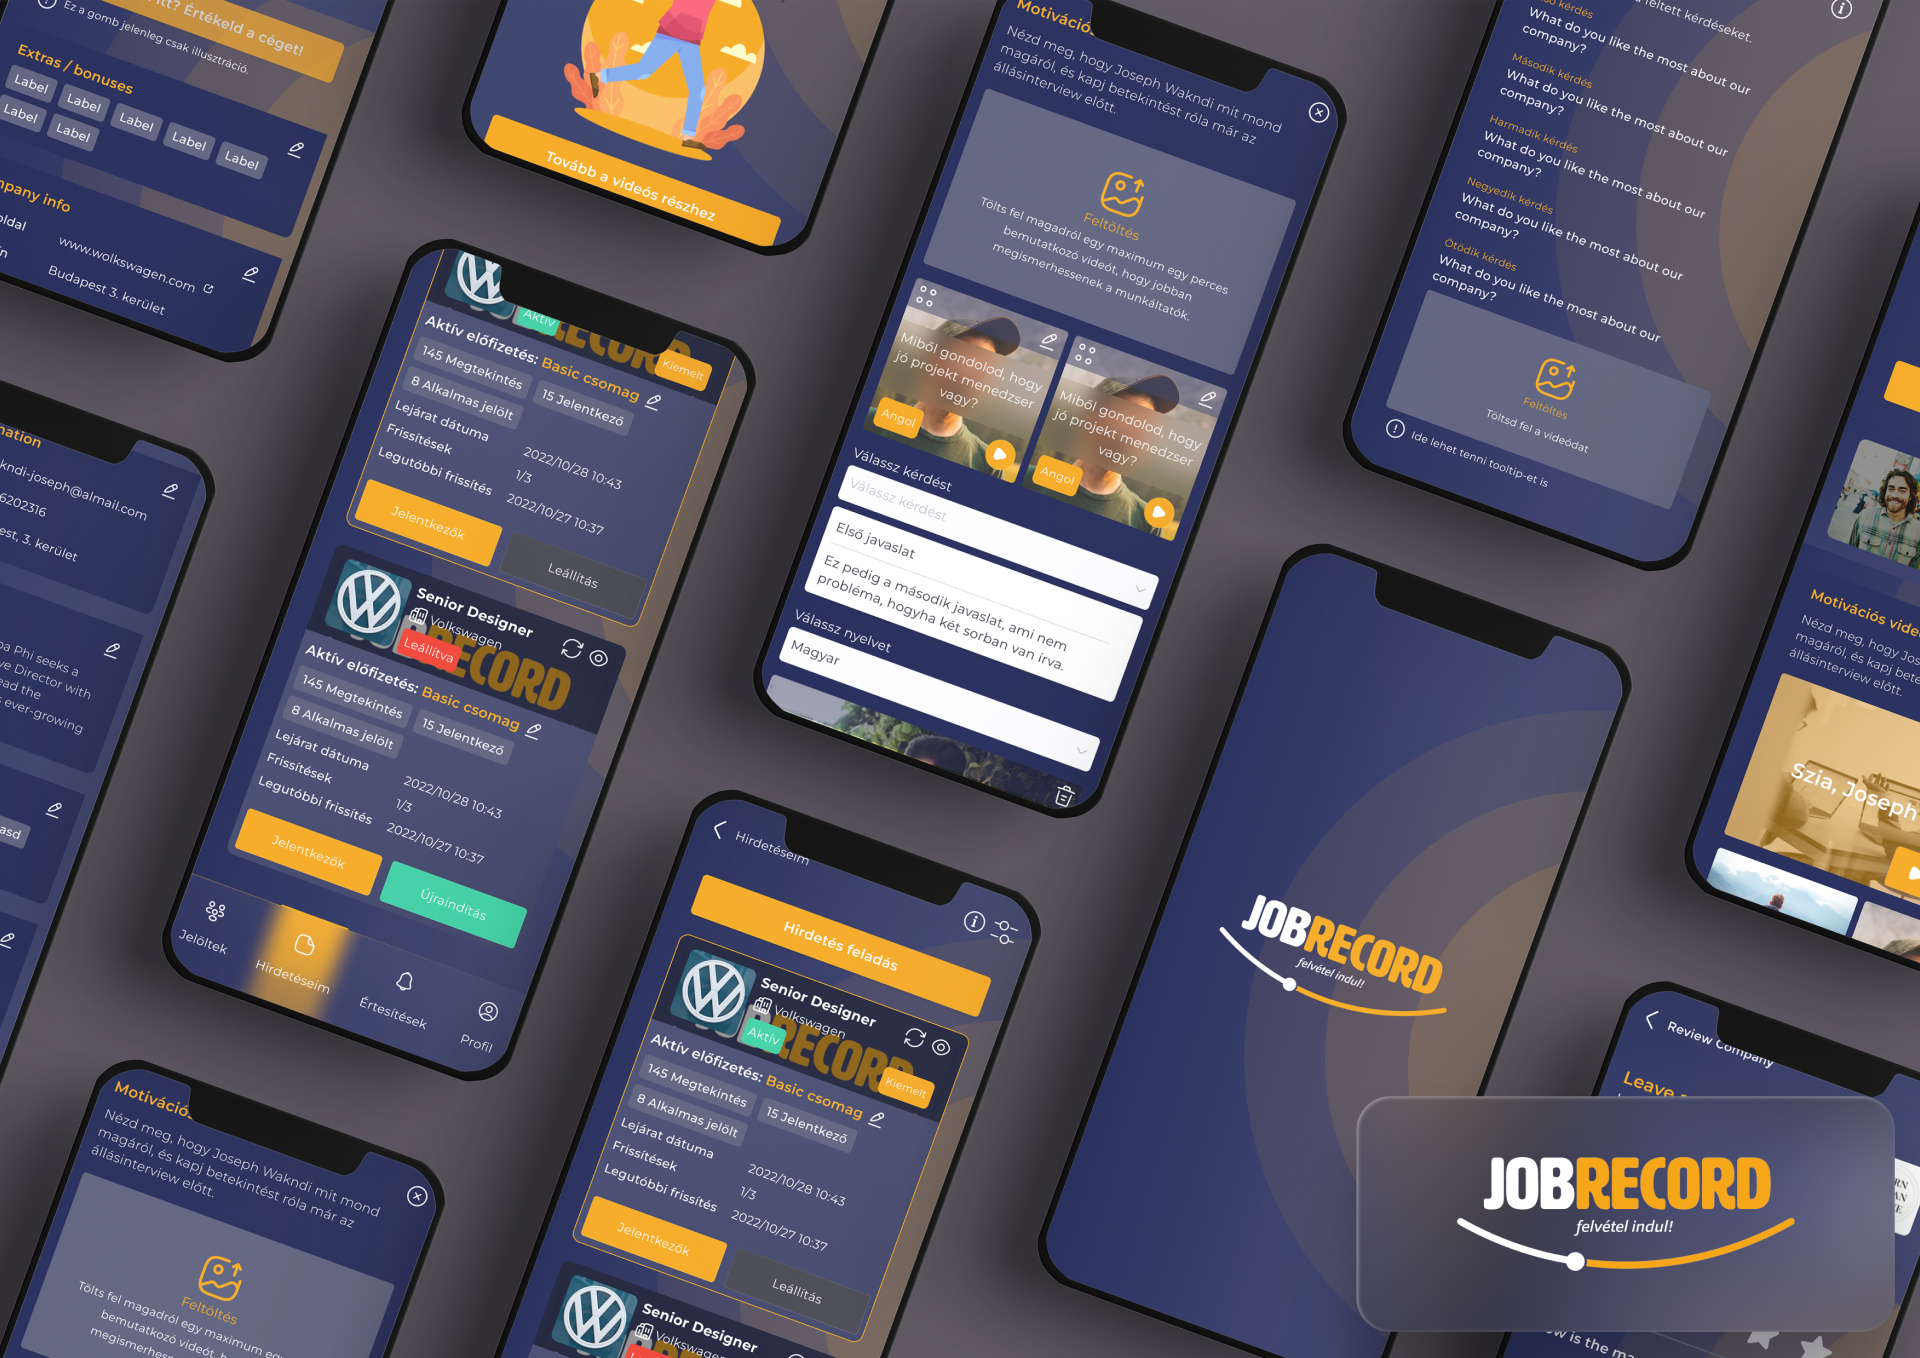 Development of JobRecord job search portal